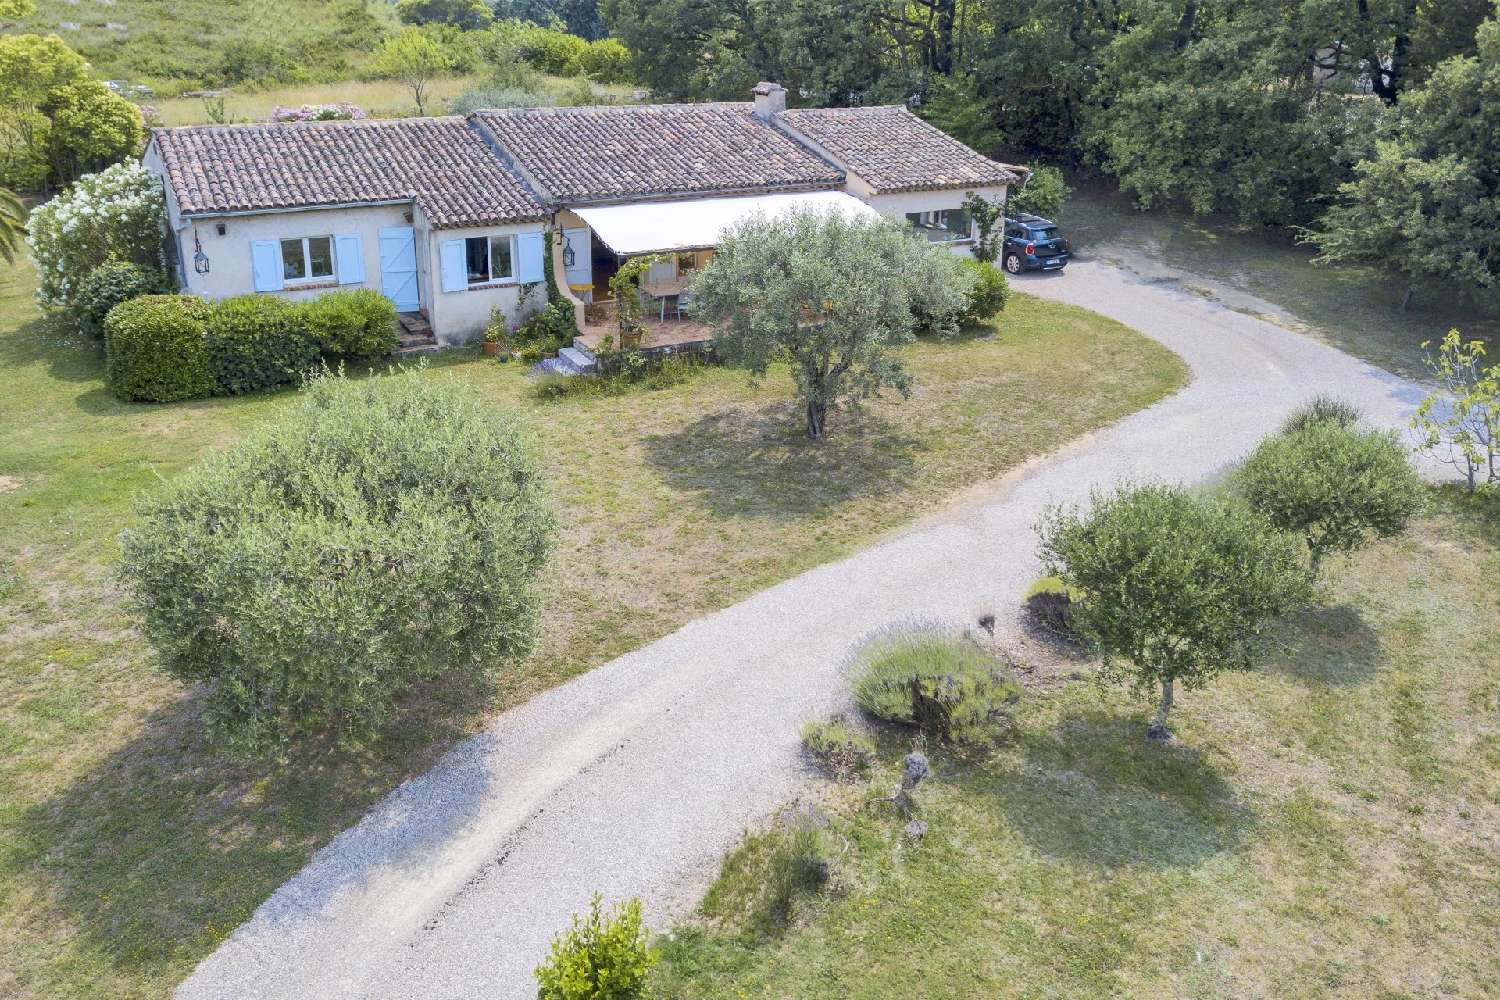  à vendre villa Châteauneuf-Grasse Alpes-Maritimes 2